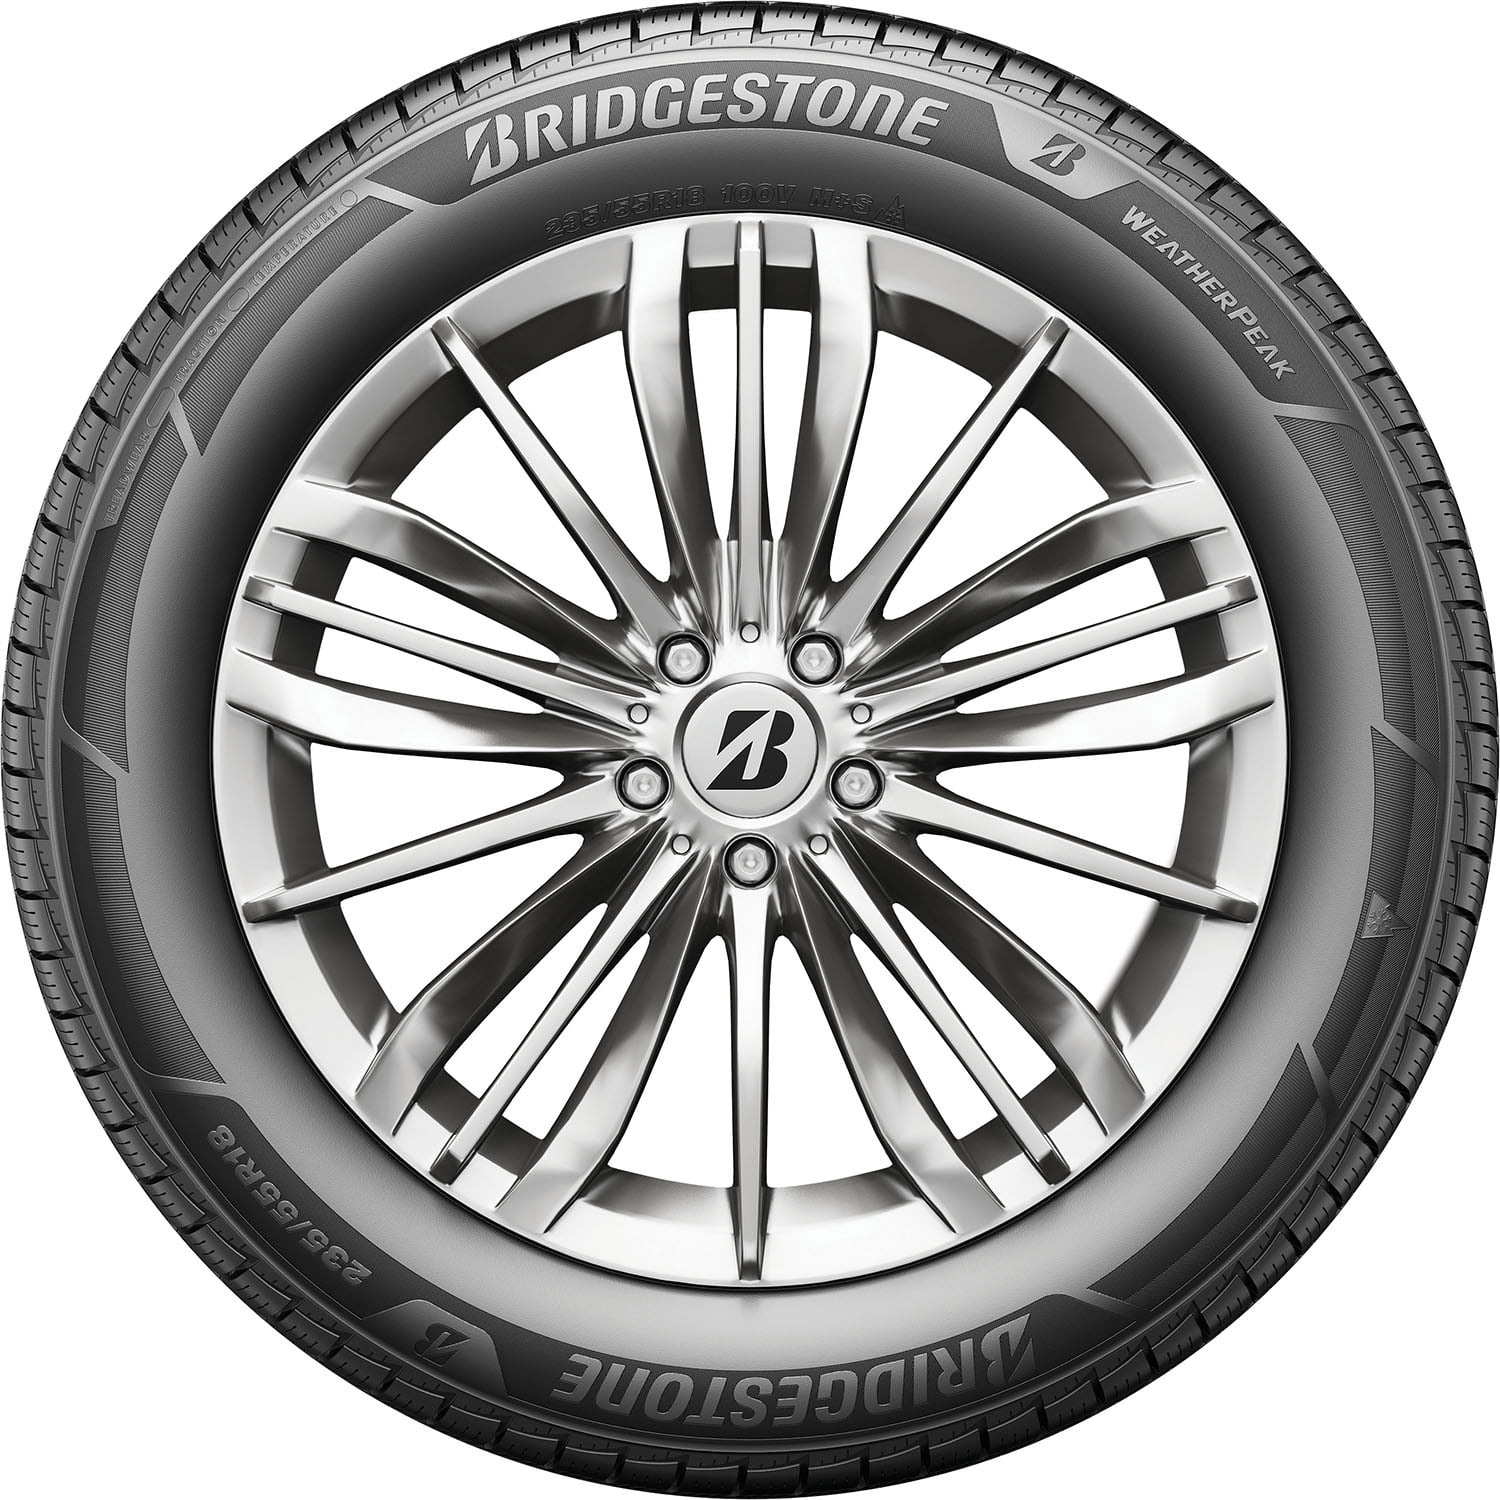 Bridgestone Weatherpeak 225/55R17 97V Highway Terrain Passenger Car Tires